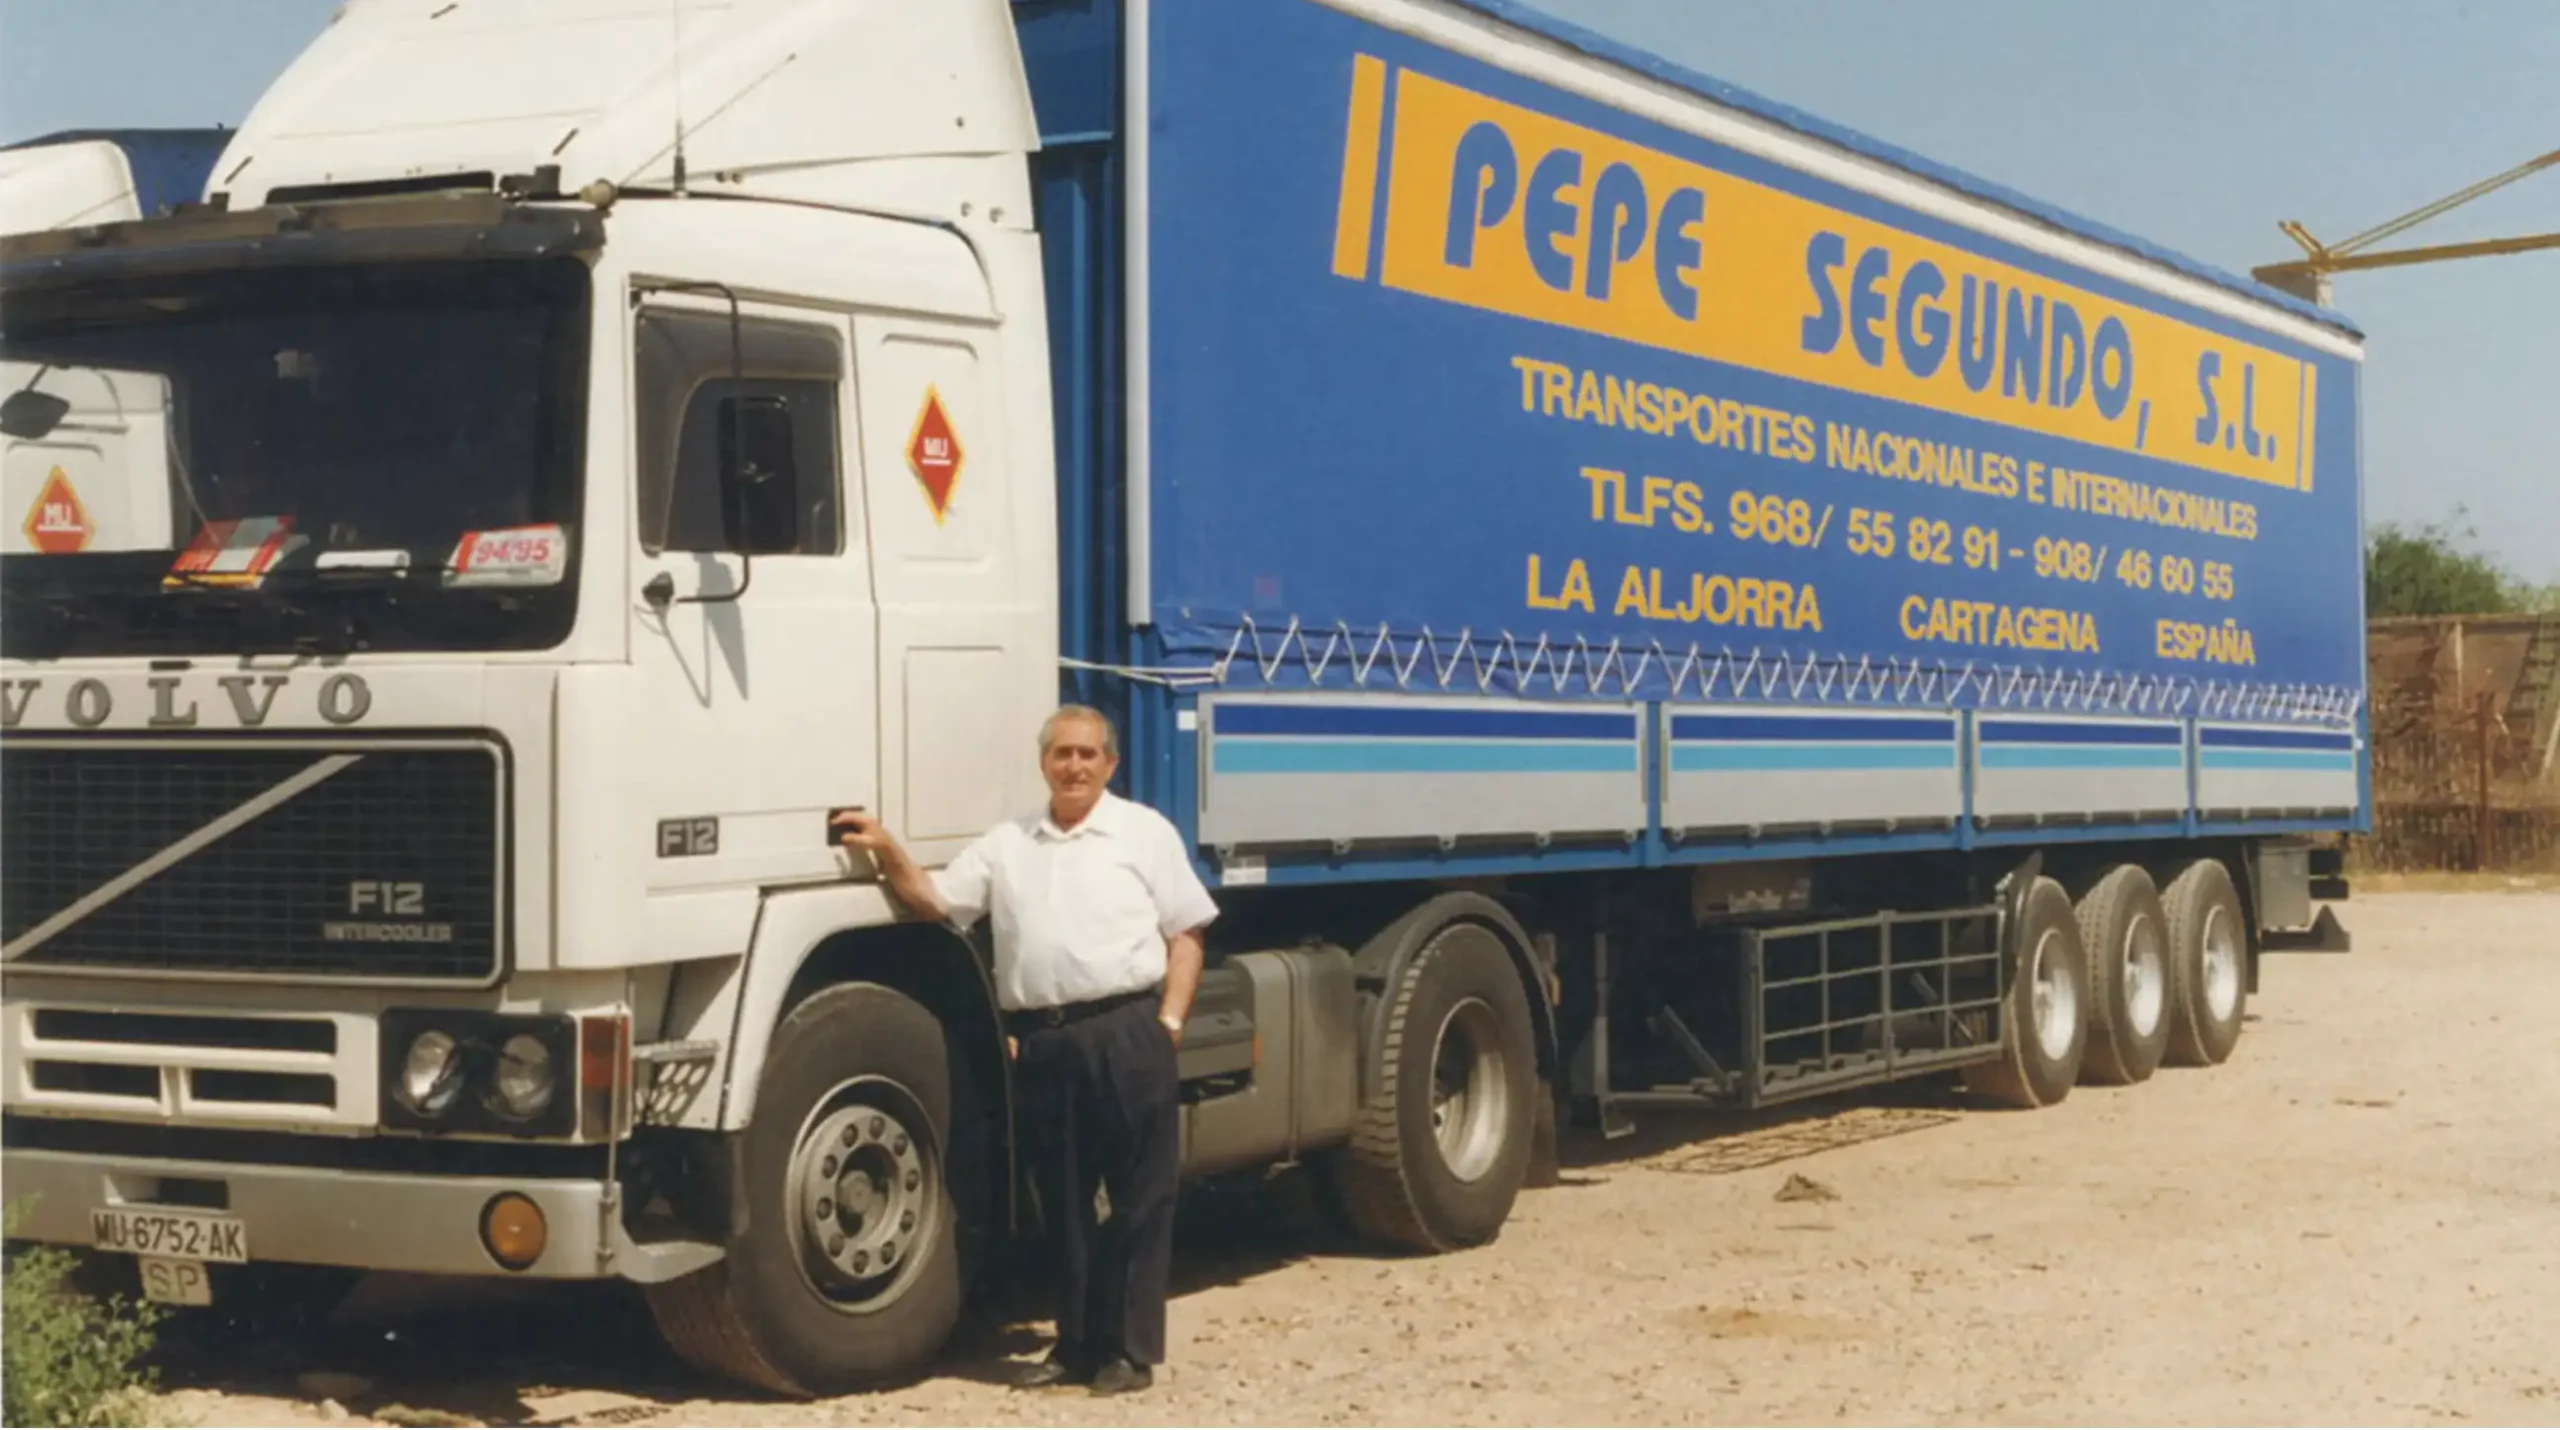 Pepe Segundo. Transportes Nacionales e internacionales.